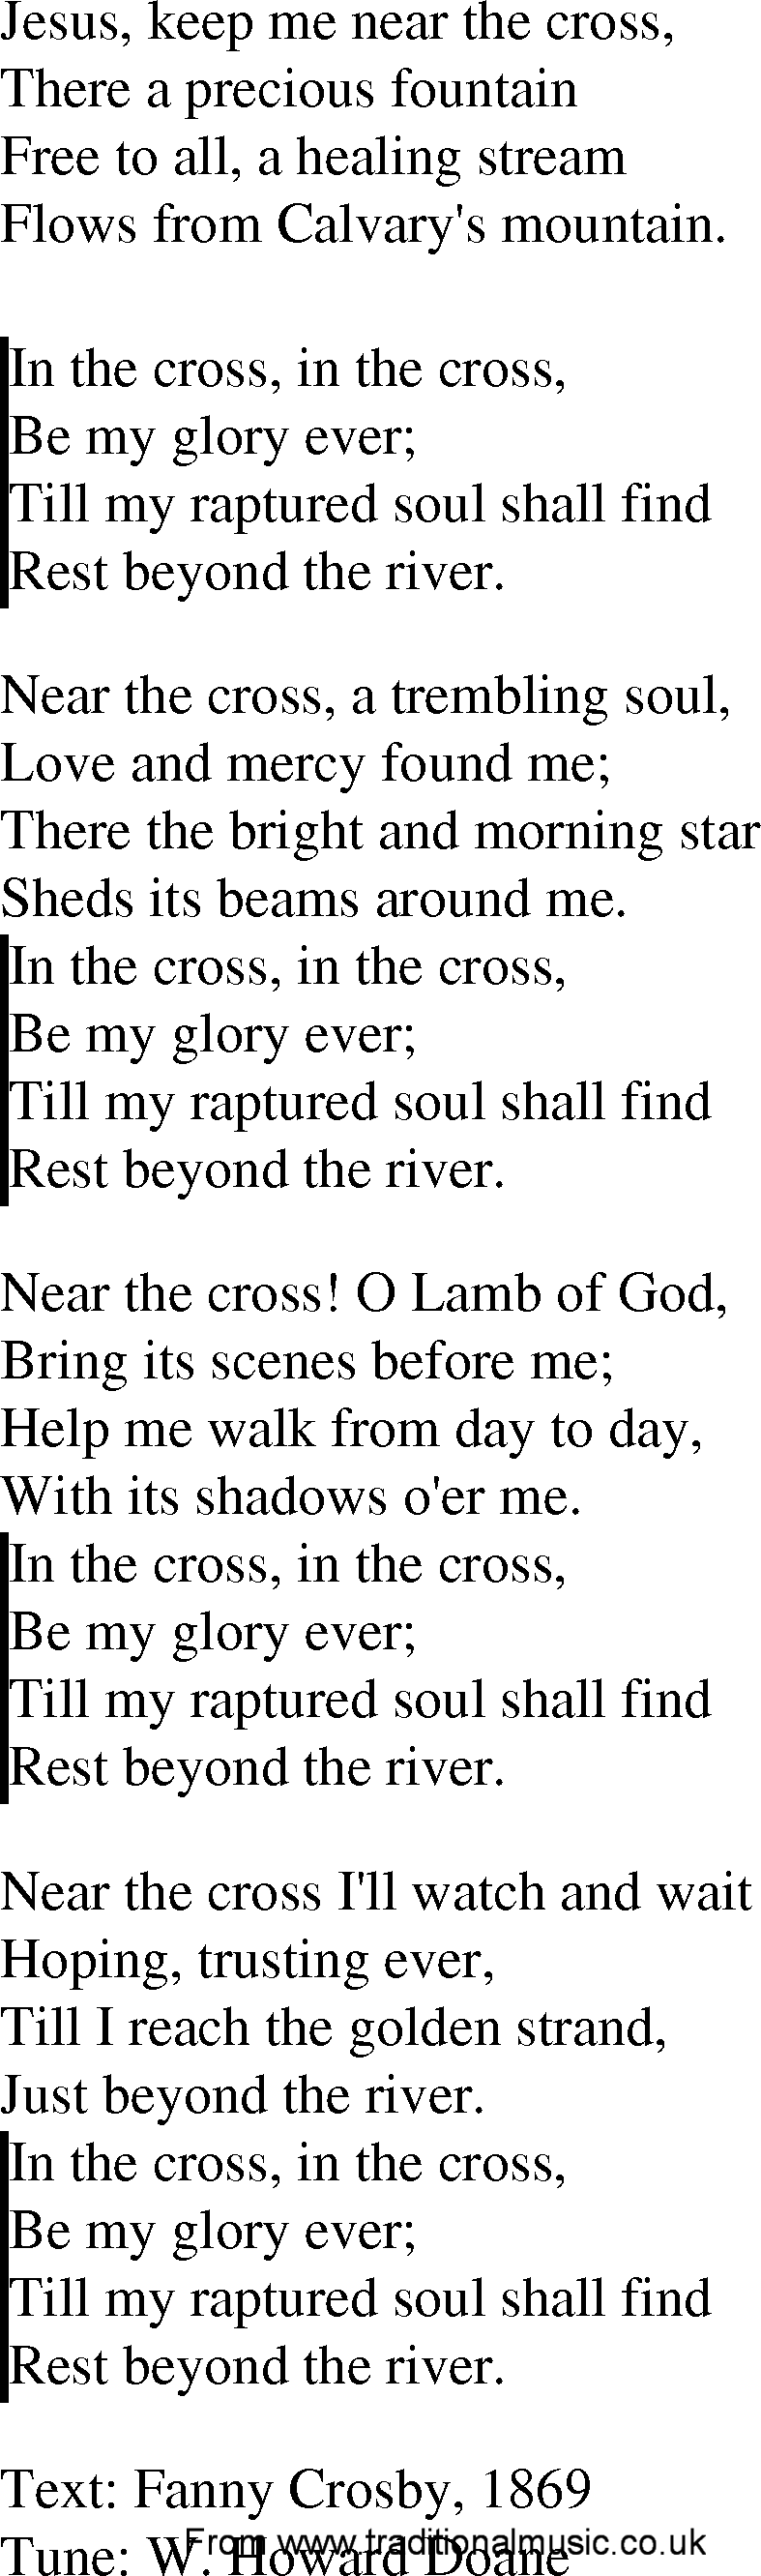 Gospel Song: near_the_cross, lyrics and chords.